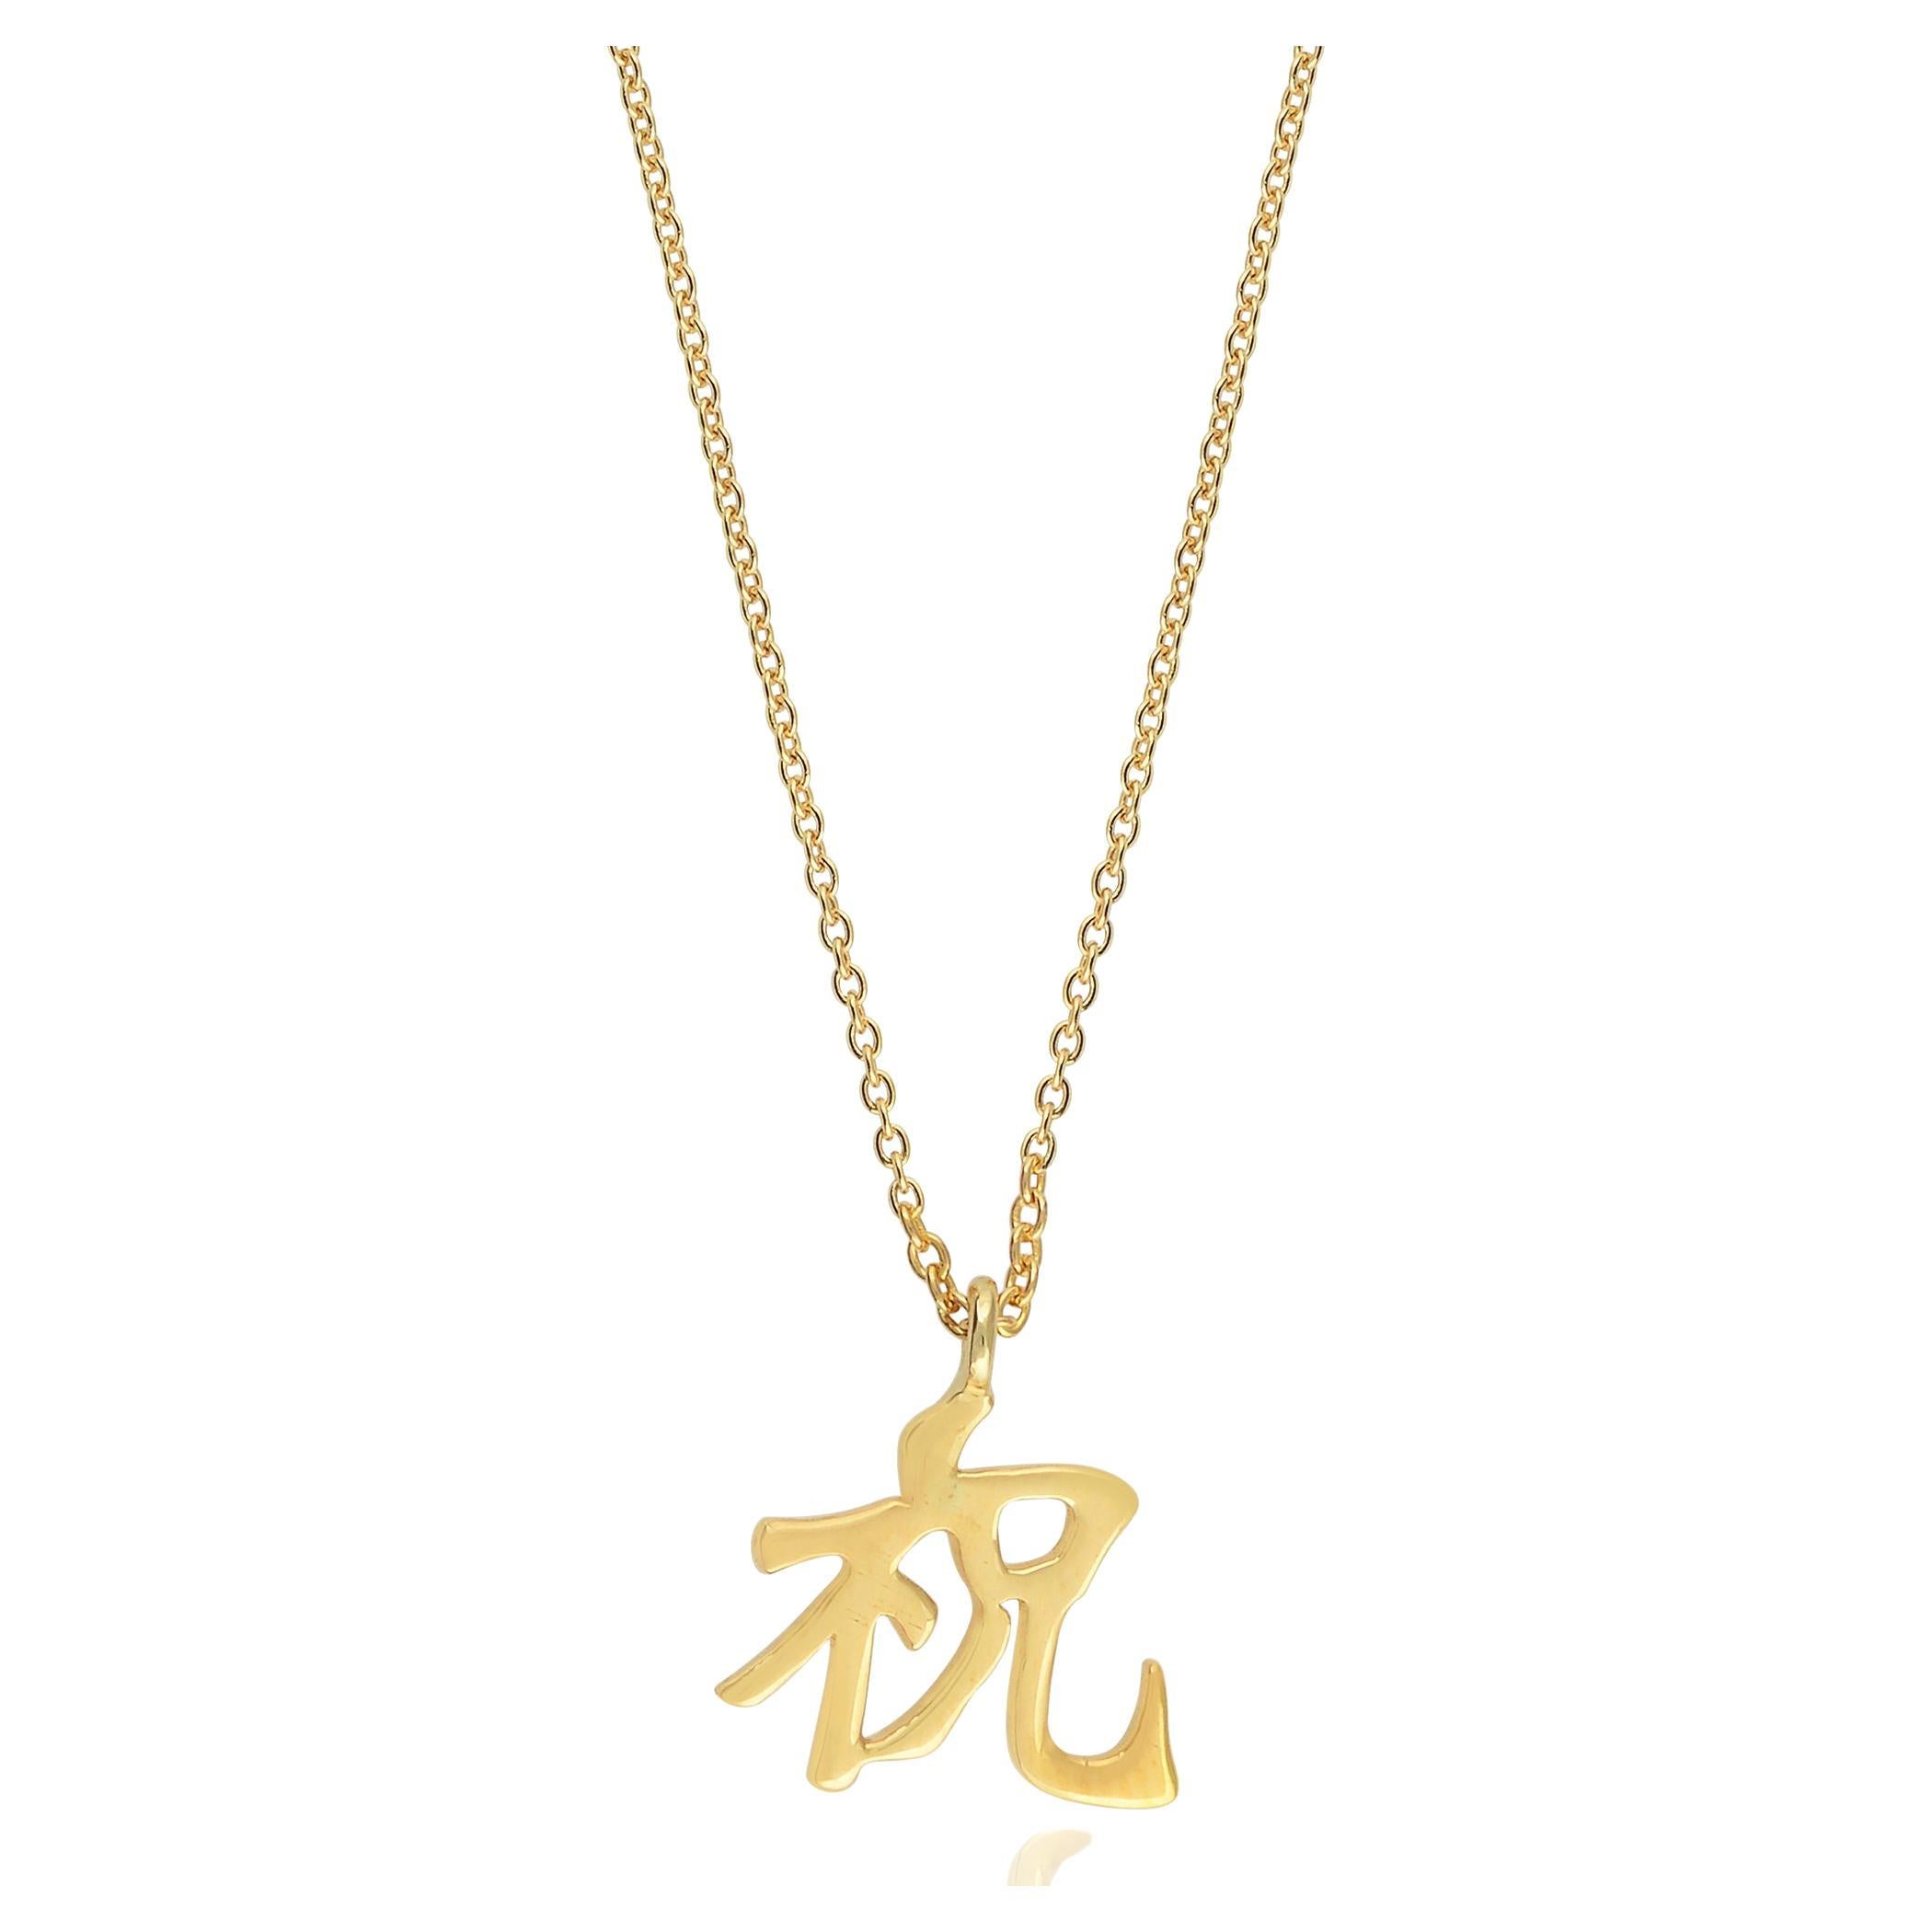 Solid 14k Yellow Gold Japanese Kanji Celebration Symbol Pendant Necklace Jewelry